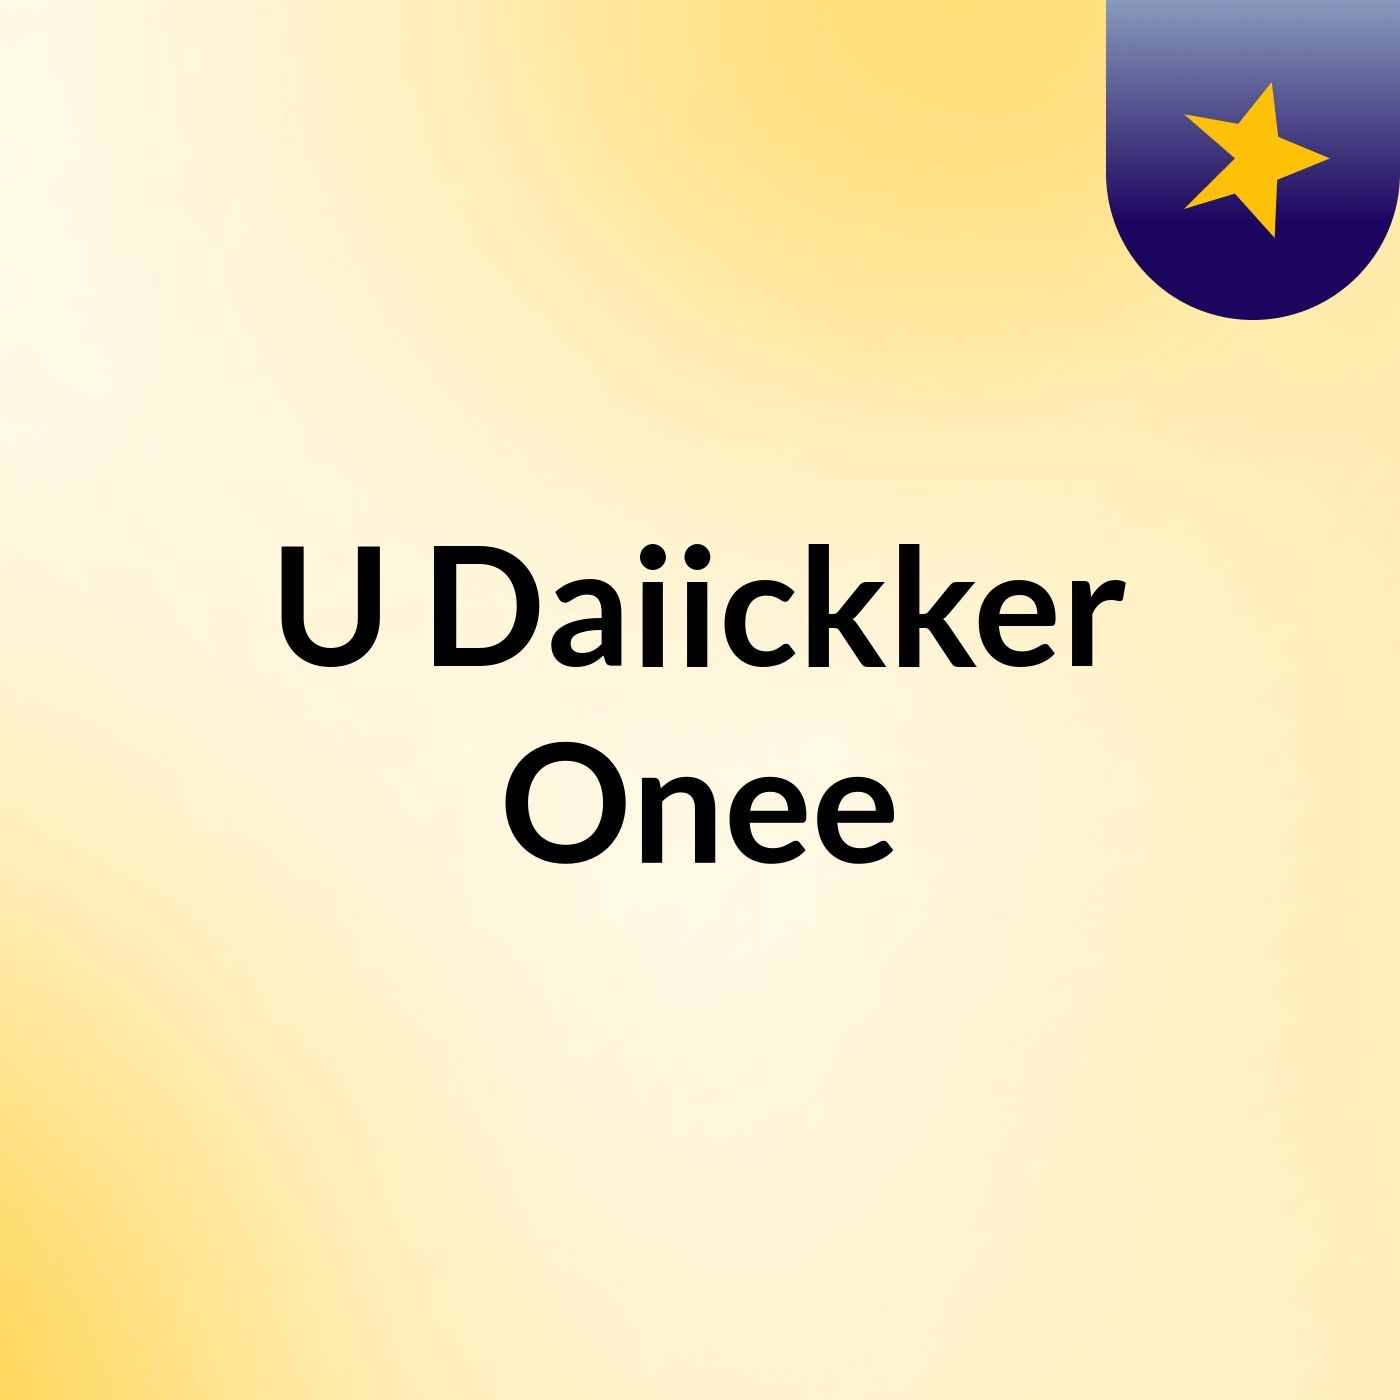 U Daiickker Onee